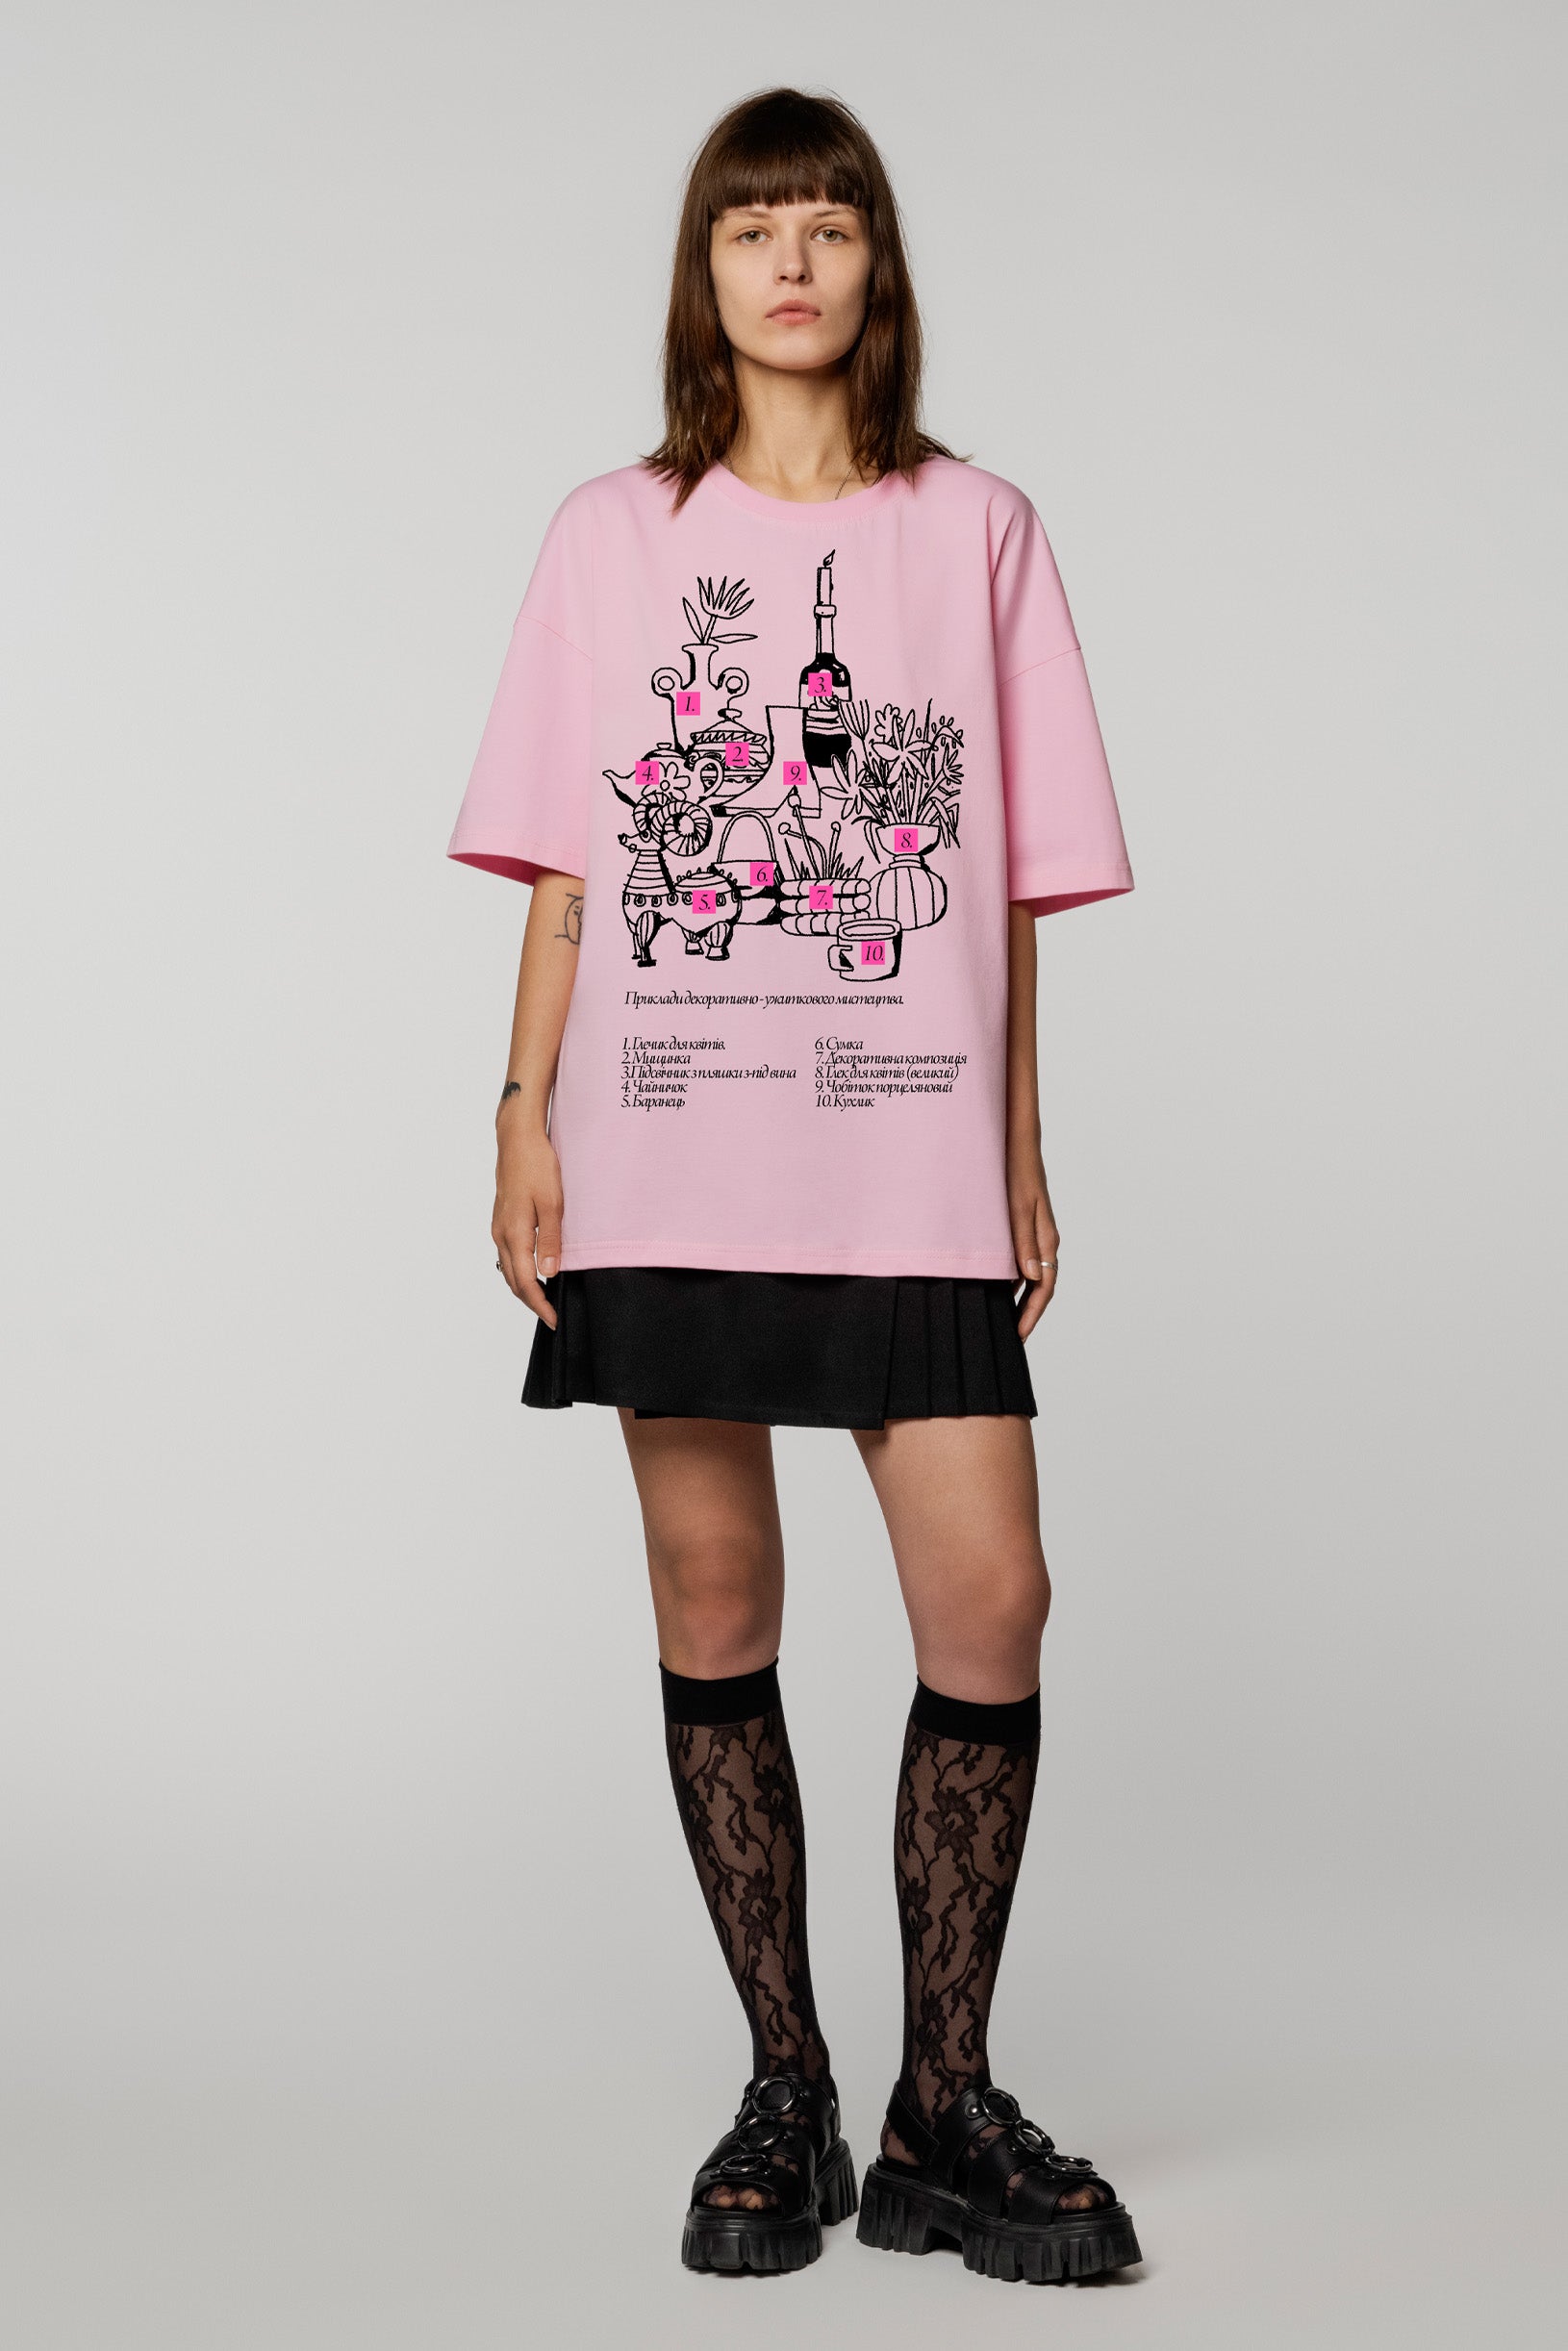 Syndicate x Derega Applied Art T-Shirt Pink